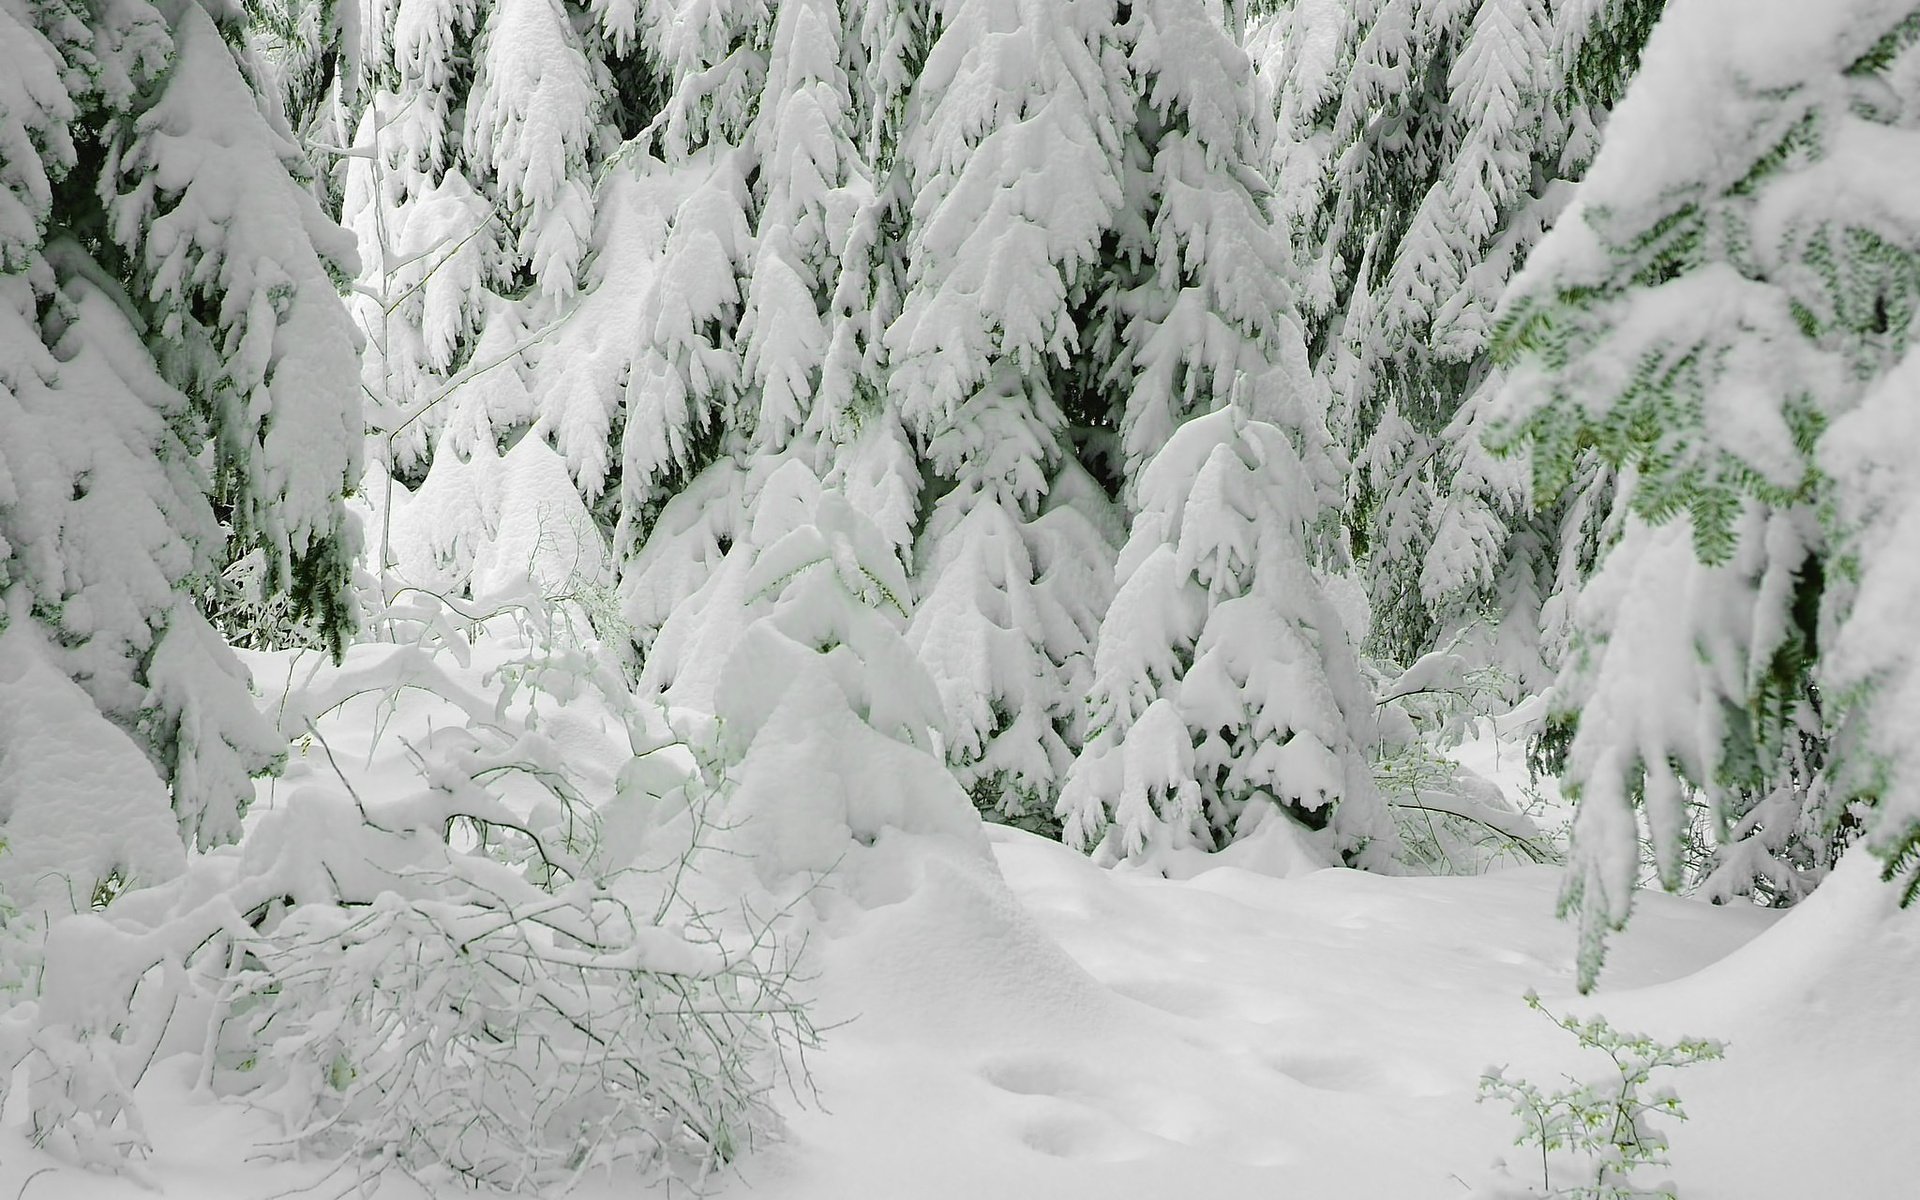 Засыпаны снегом ели. Зимний лес. Лес в снегу. Снежный лес. Сказочный зимний лес.